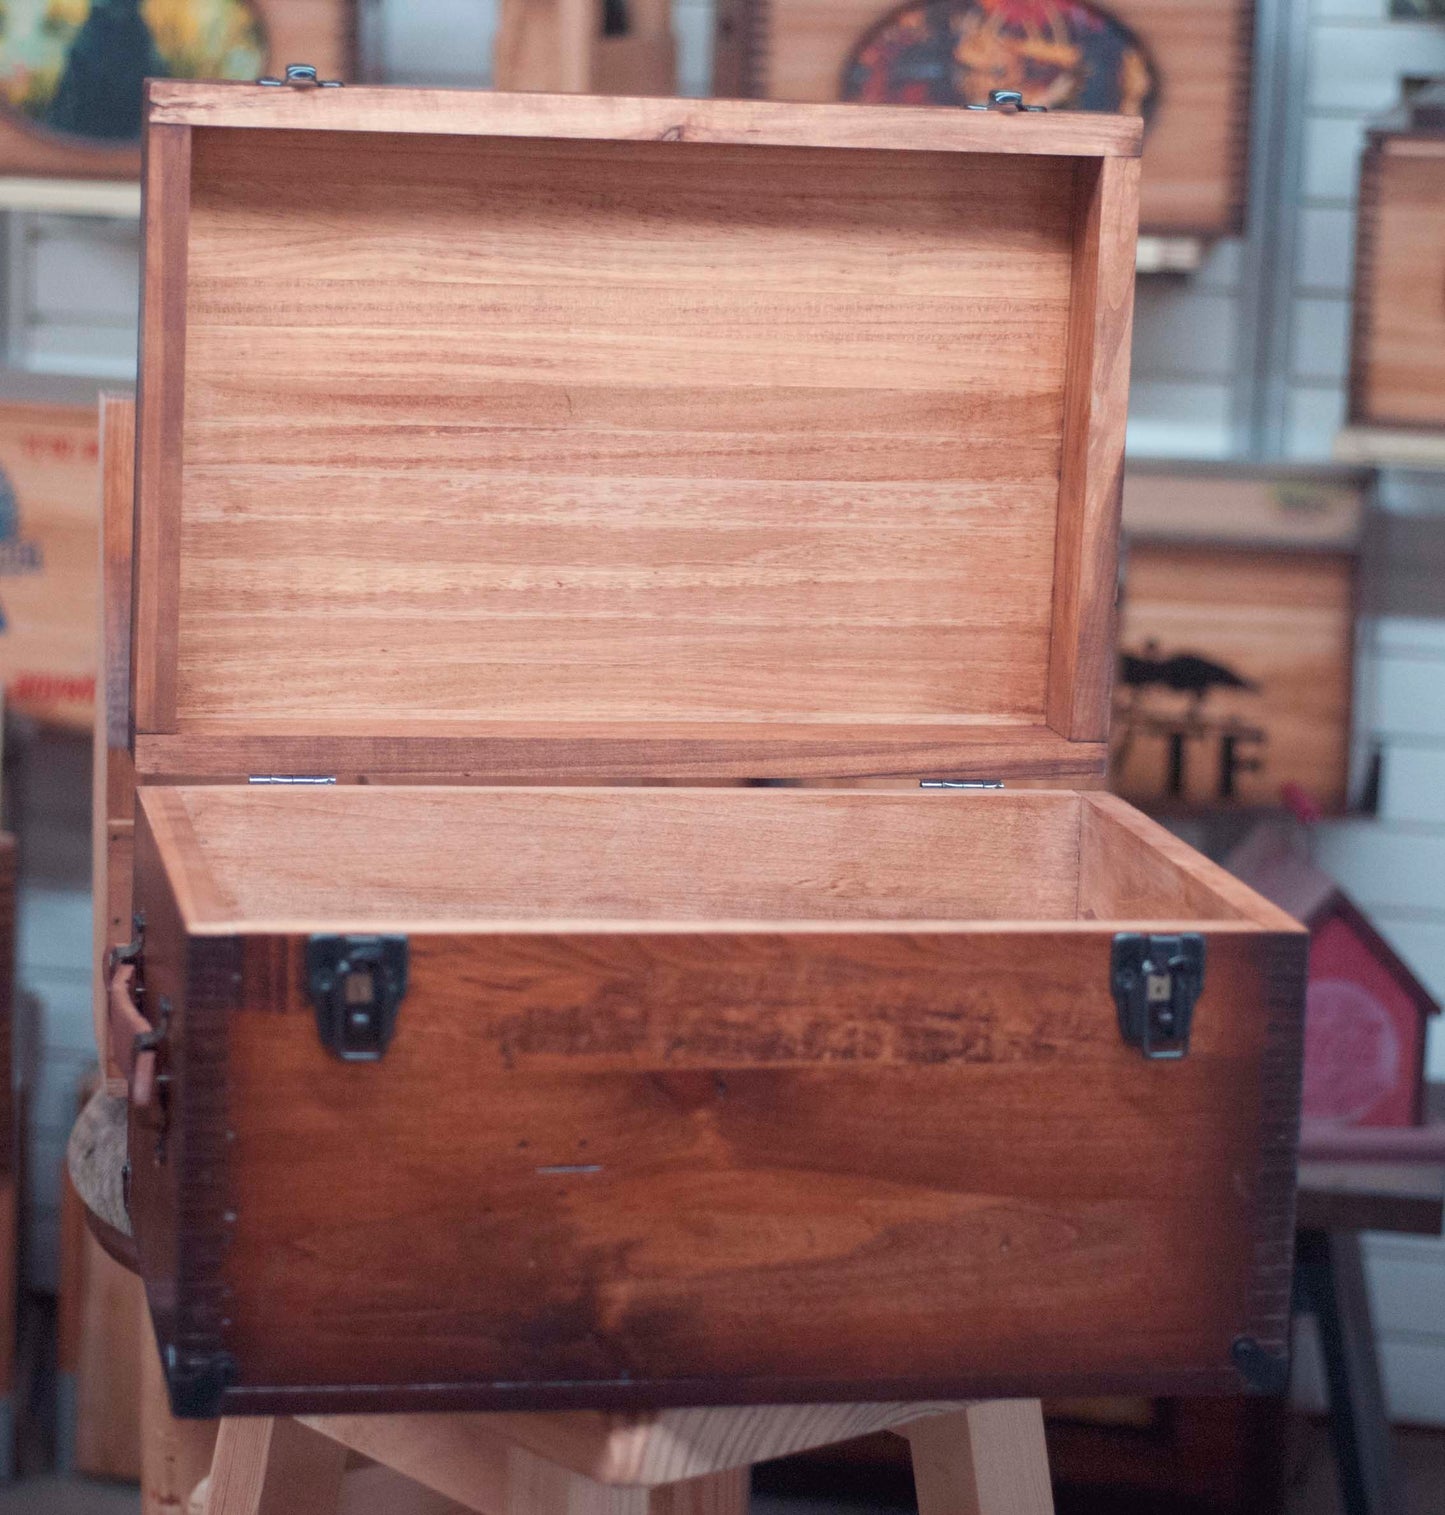 Wooden Memory Box Keepsake Box with open lid